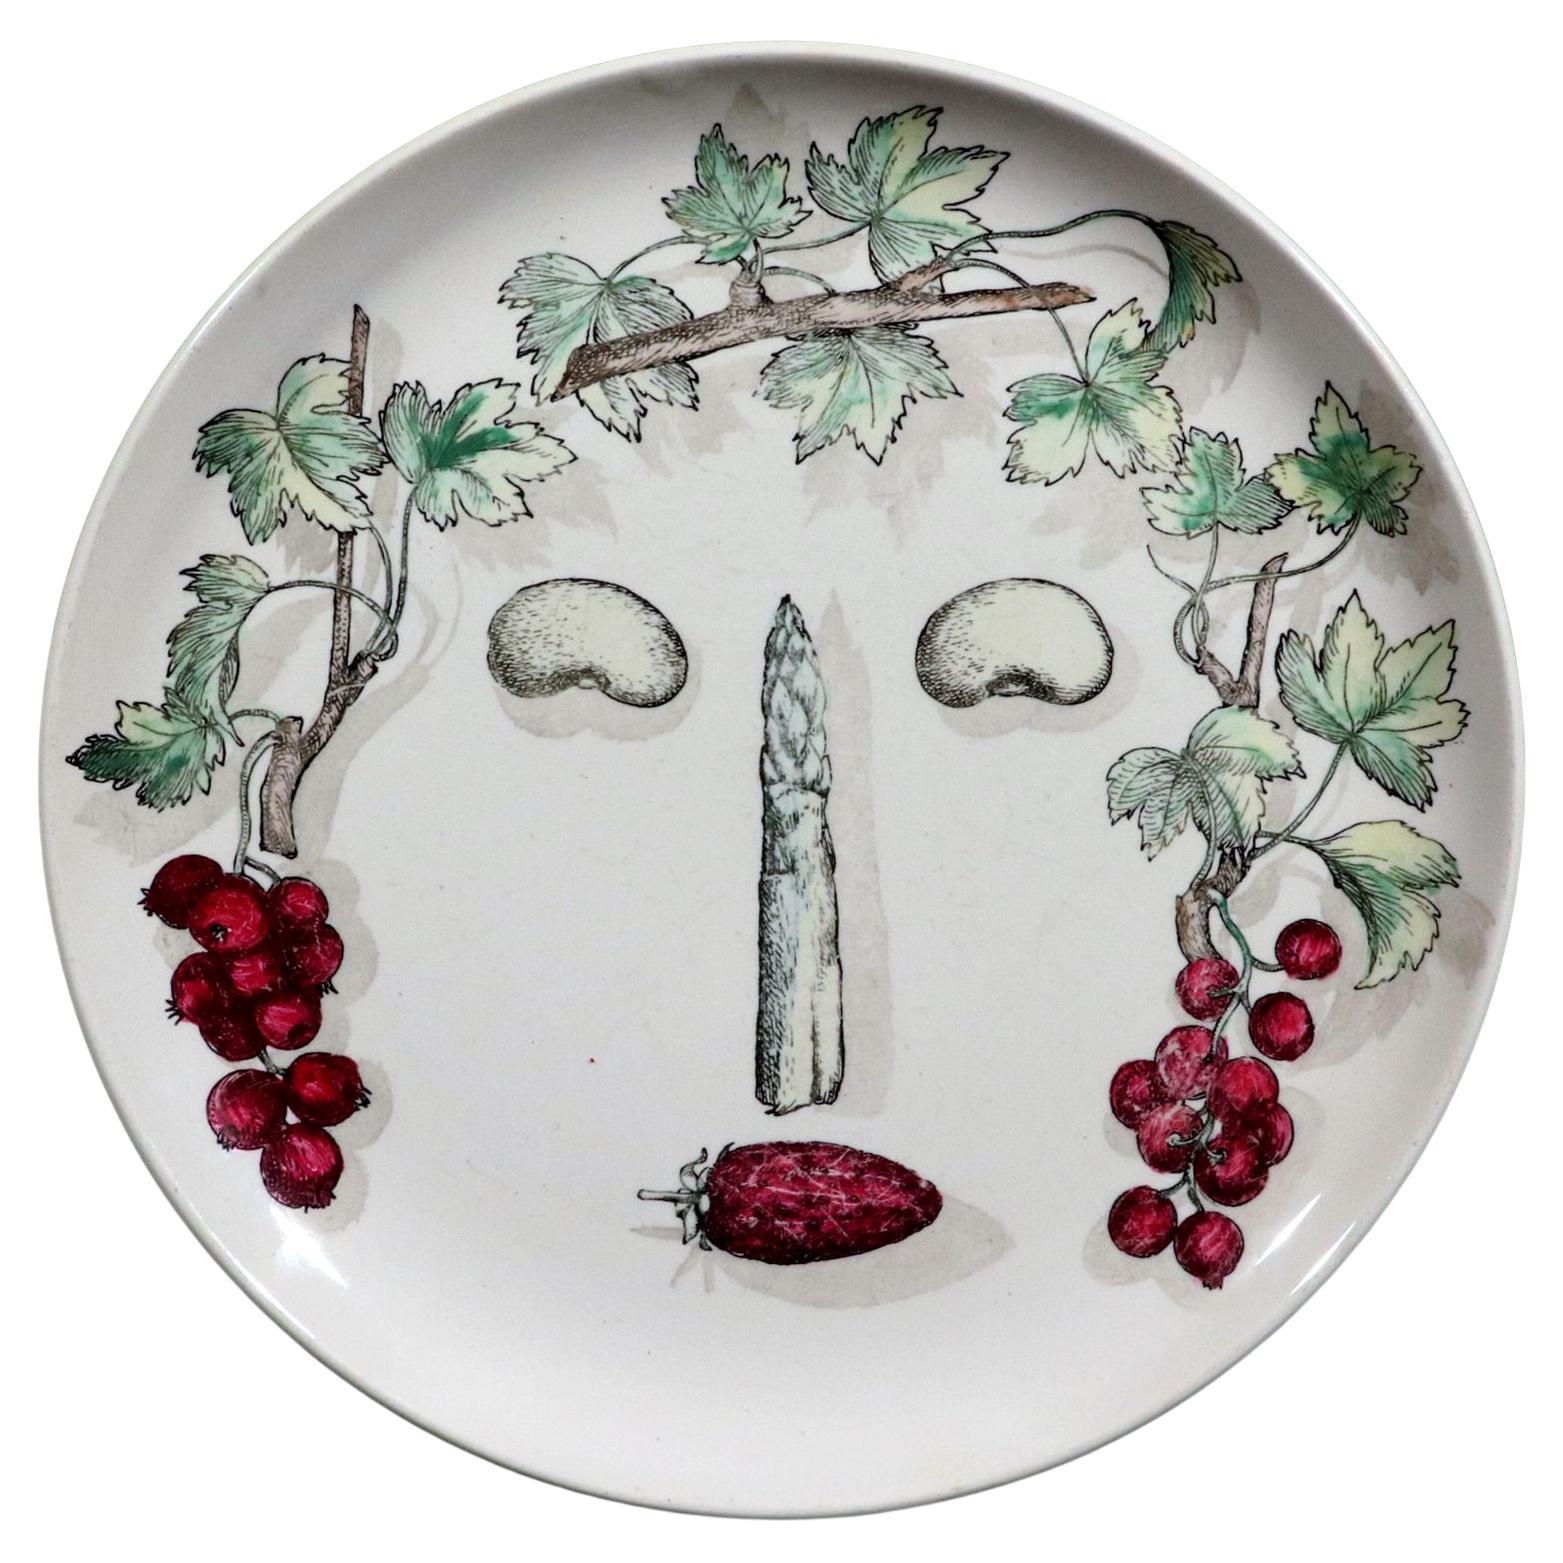 Piero Fornasetti Pottery Arcimboldesca Vegetable Face Plate